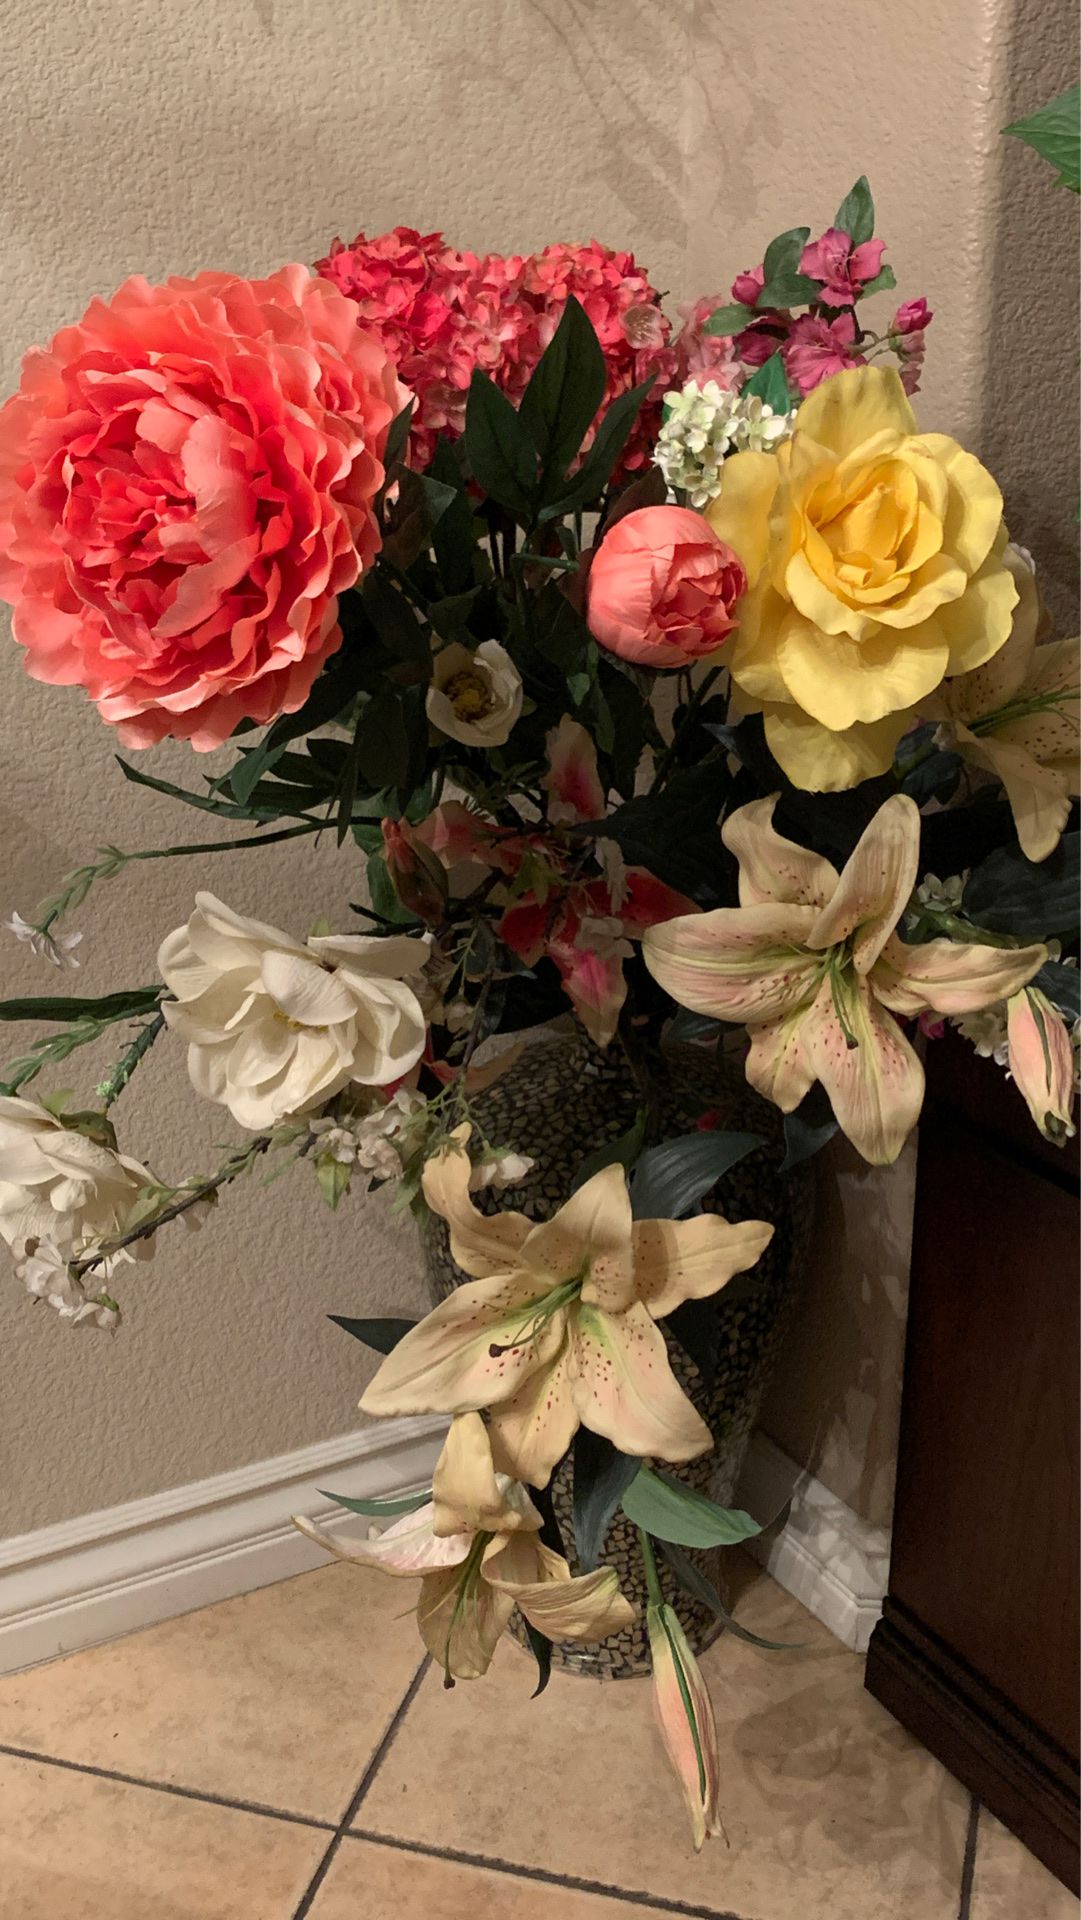 Flower and vase